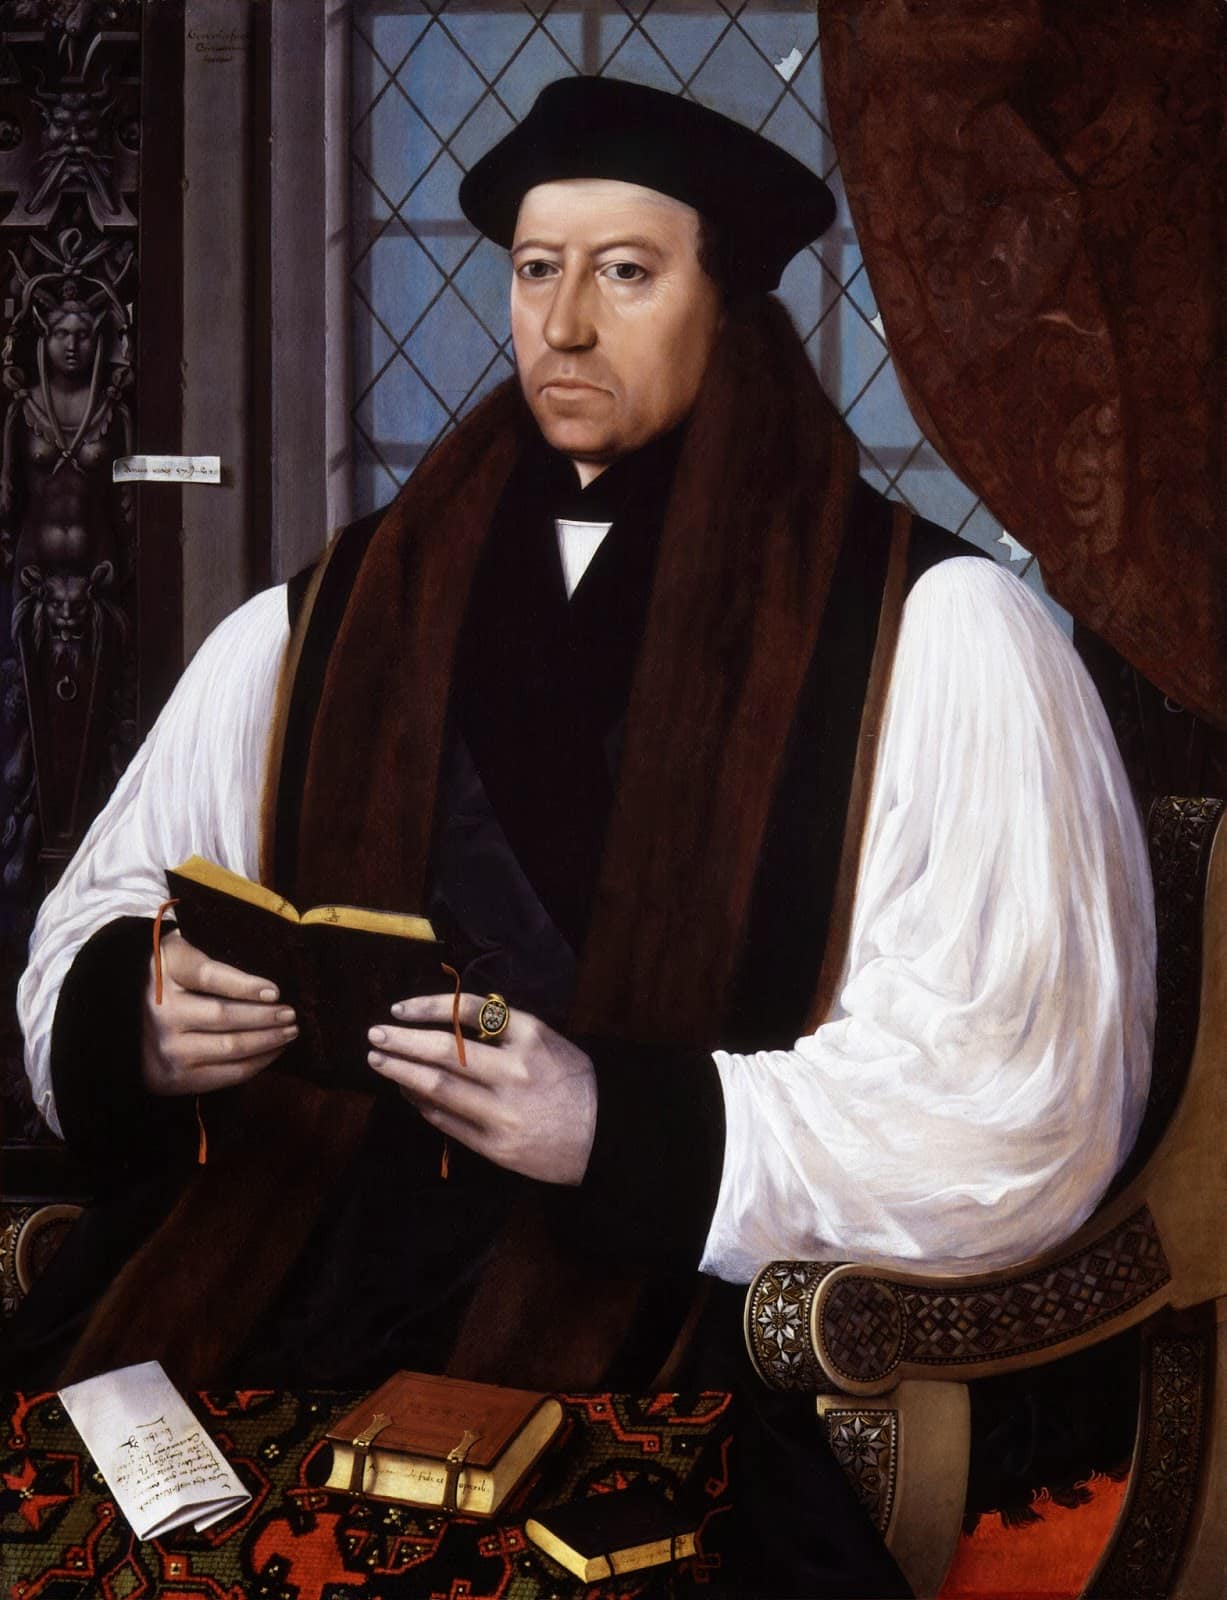 July 2, 1489 - Thomas Cranmer Born